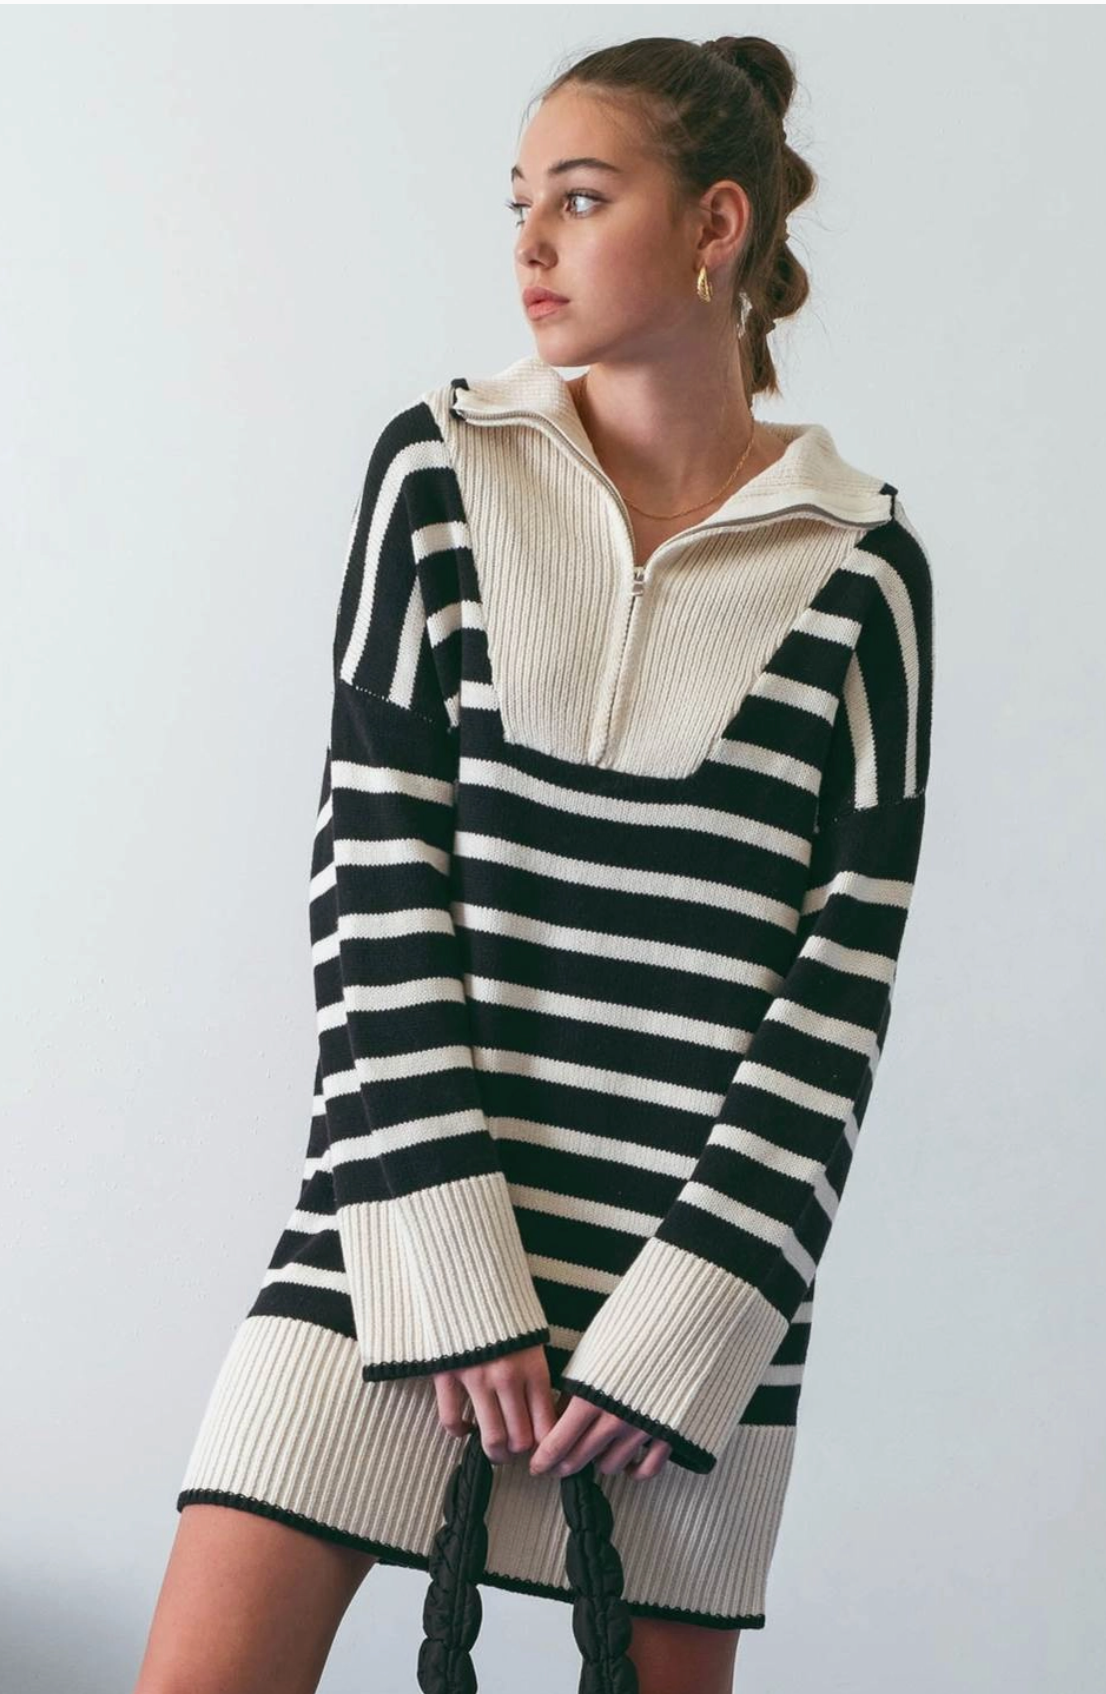 Comfy But Cute In My Striped Sweater Dress